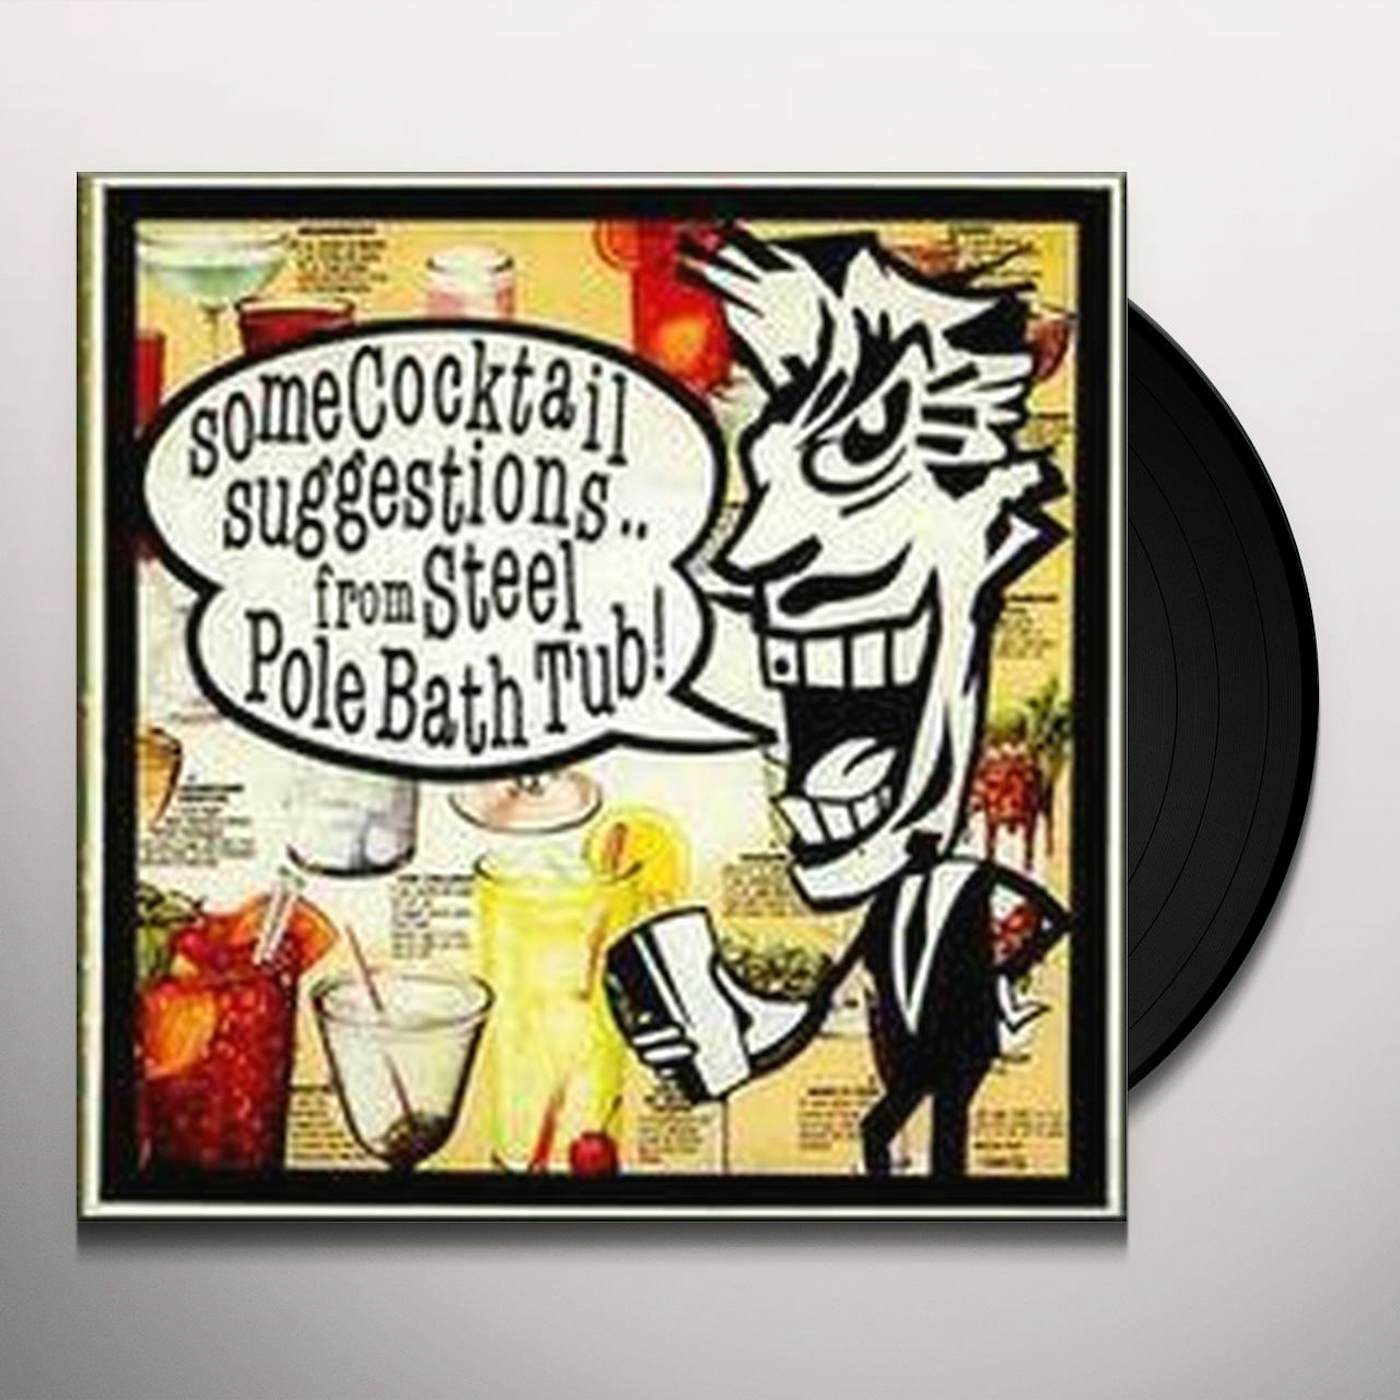 Steel Pole Bath Tub SOME COCKTAIL Vinyl Record